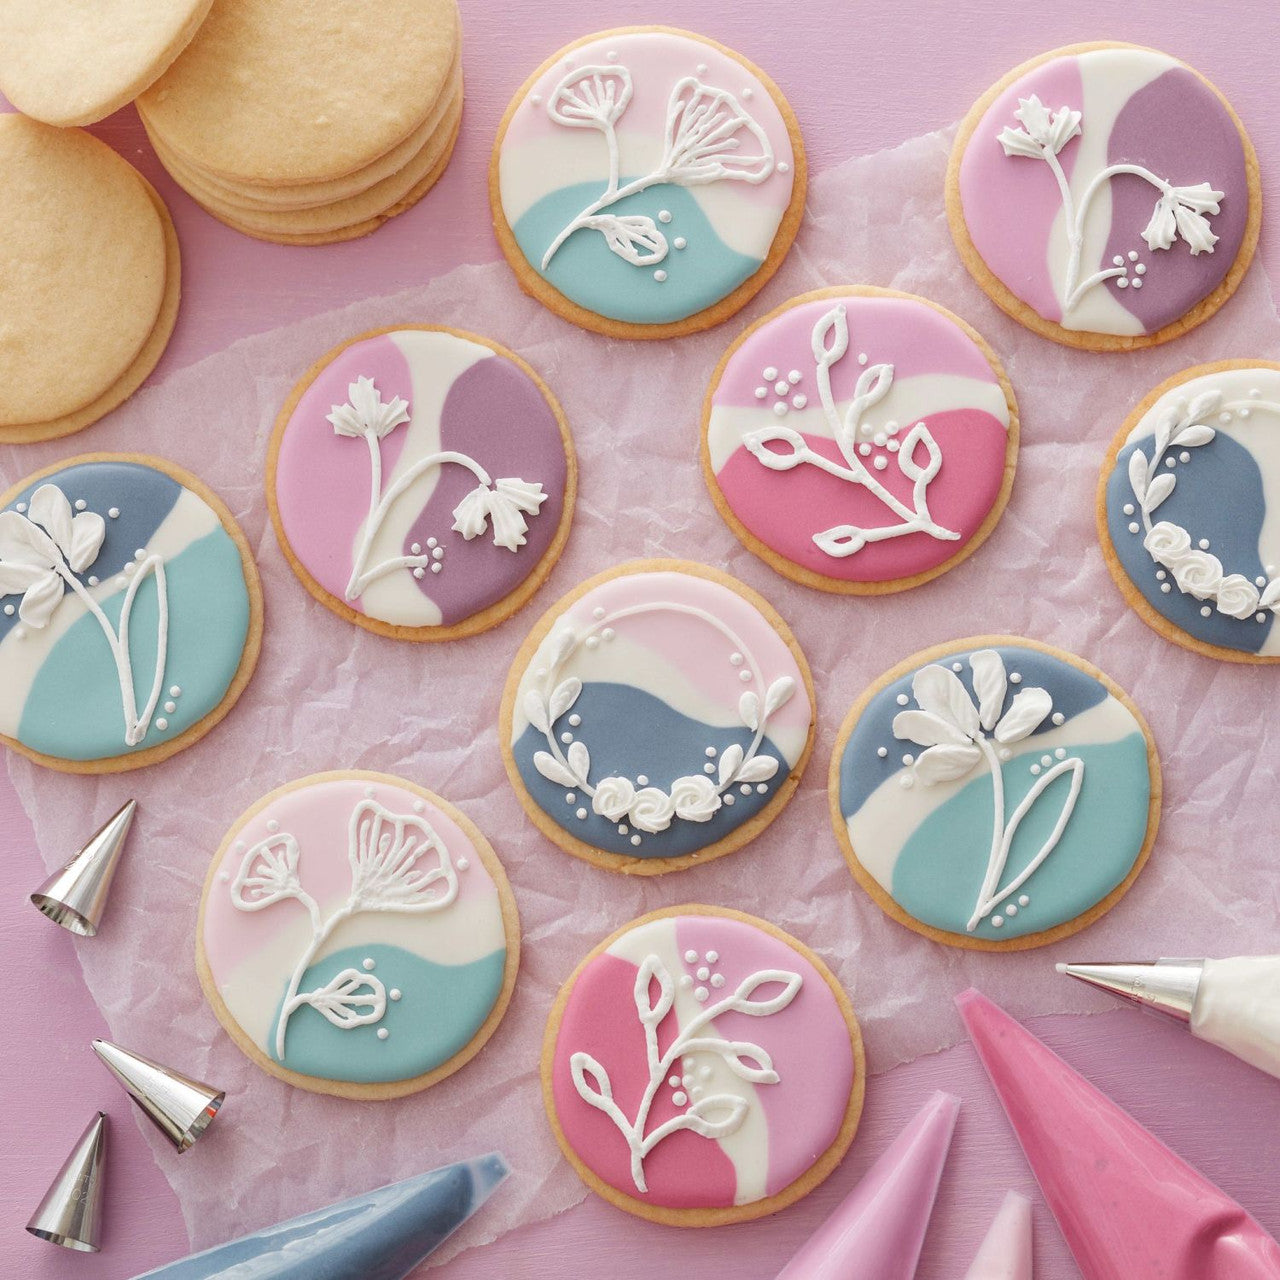 Cookie Decorating Set, 12 Piece